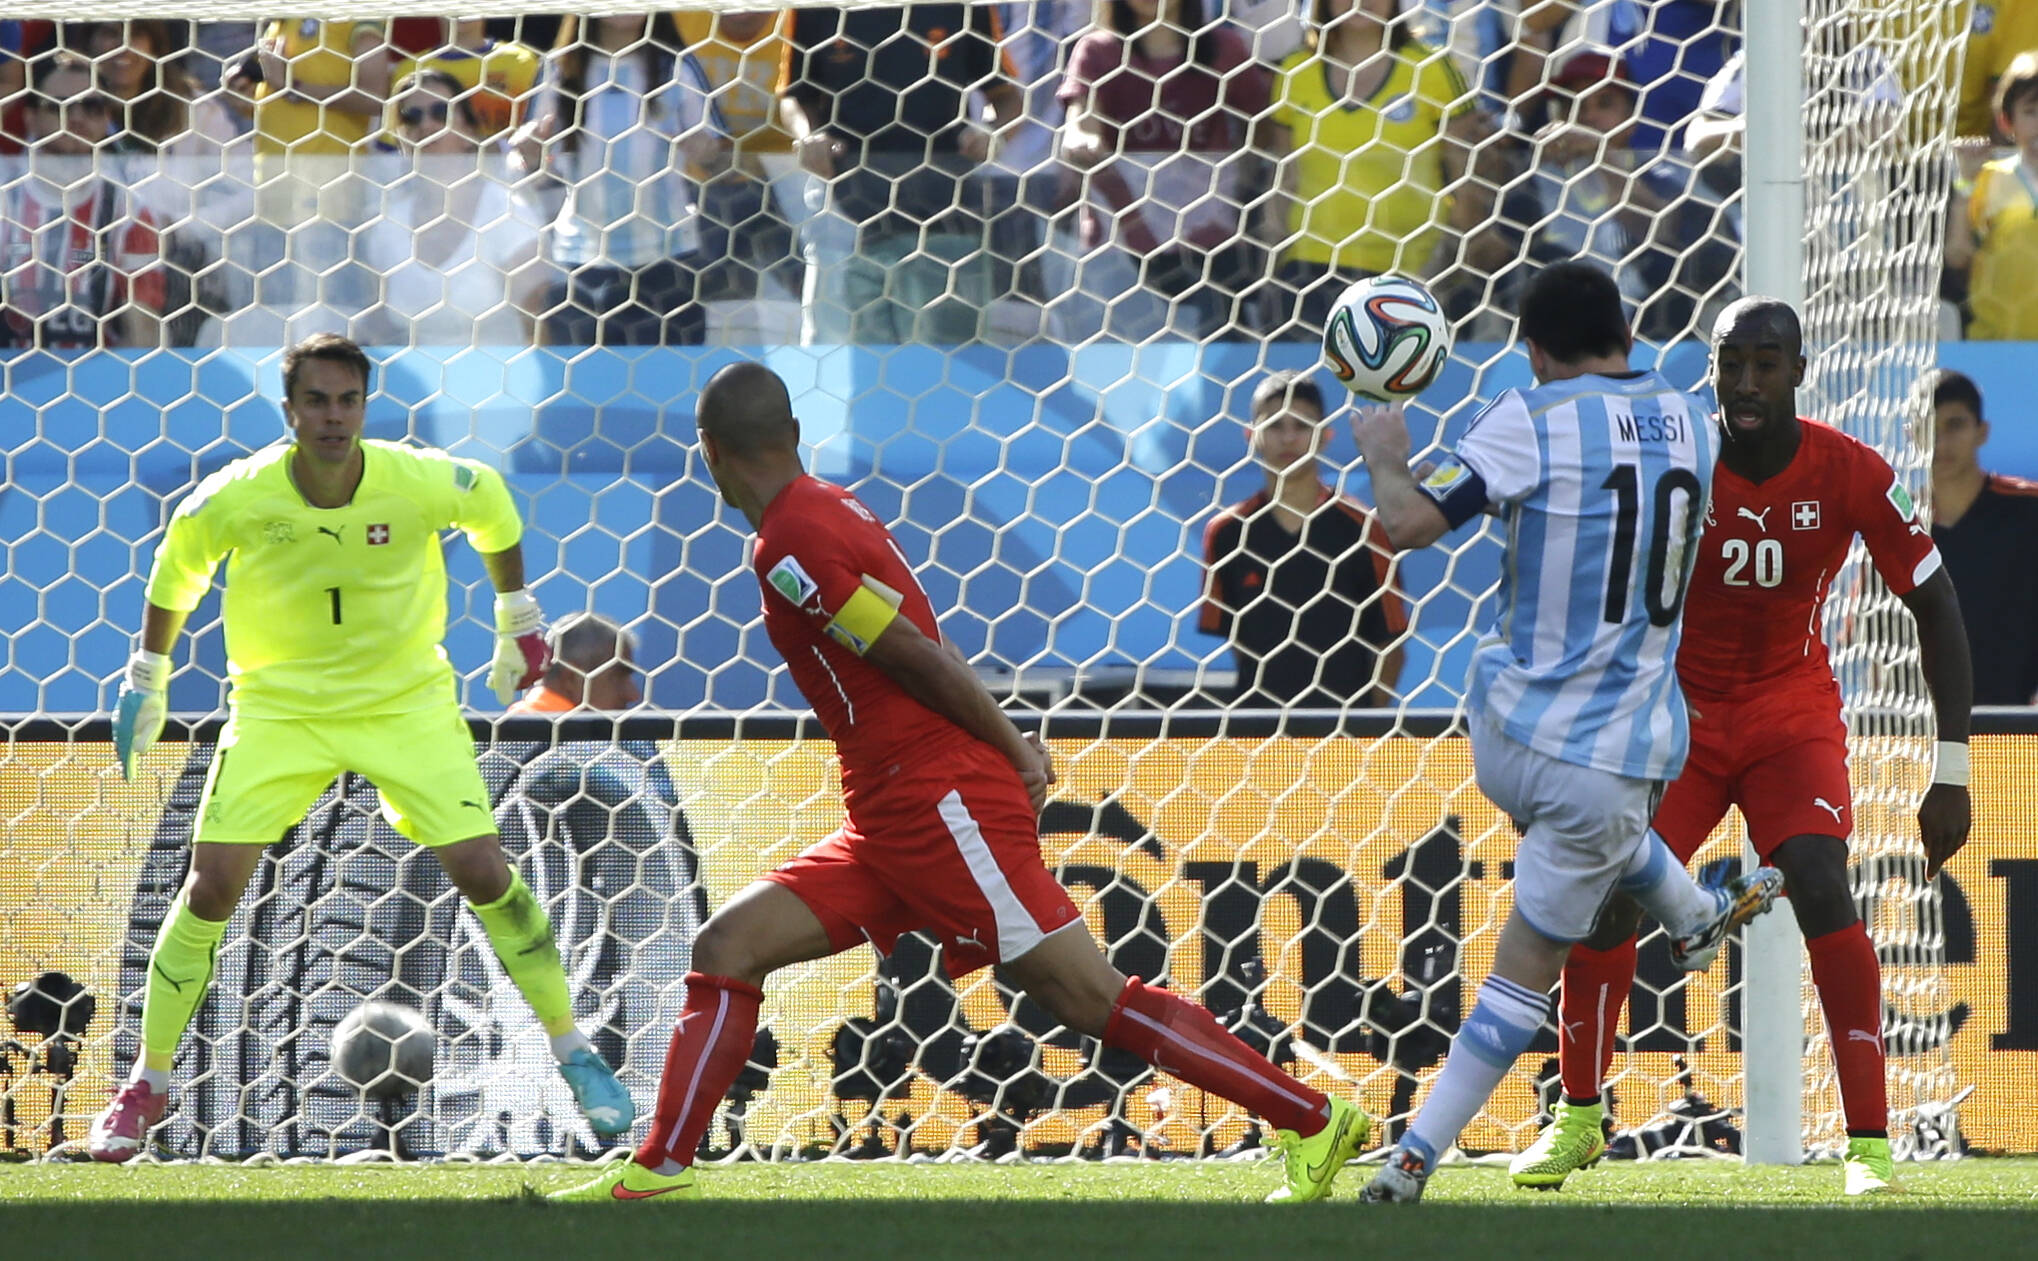 Messi arrisca, mas o chute passa sobre o gol de Benaglio. Foto: AP/PAULO WHITAKER